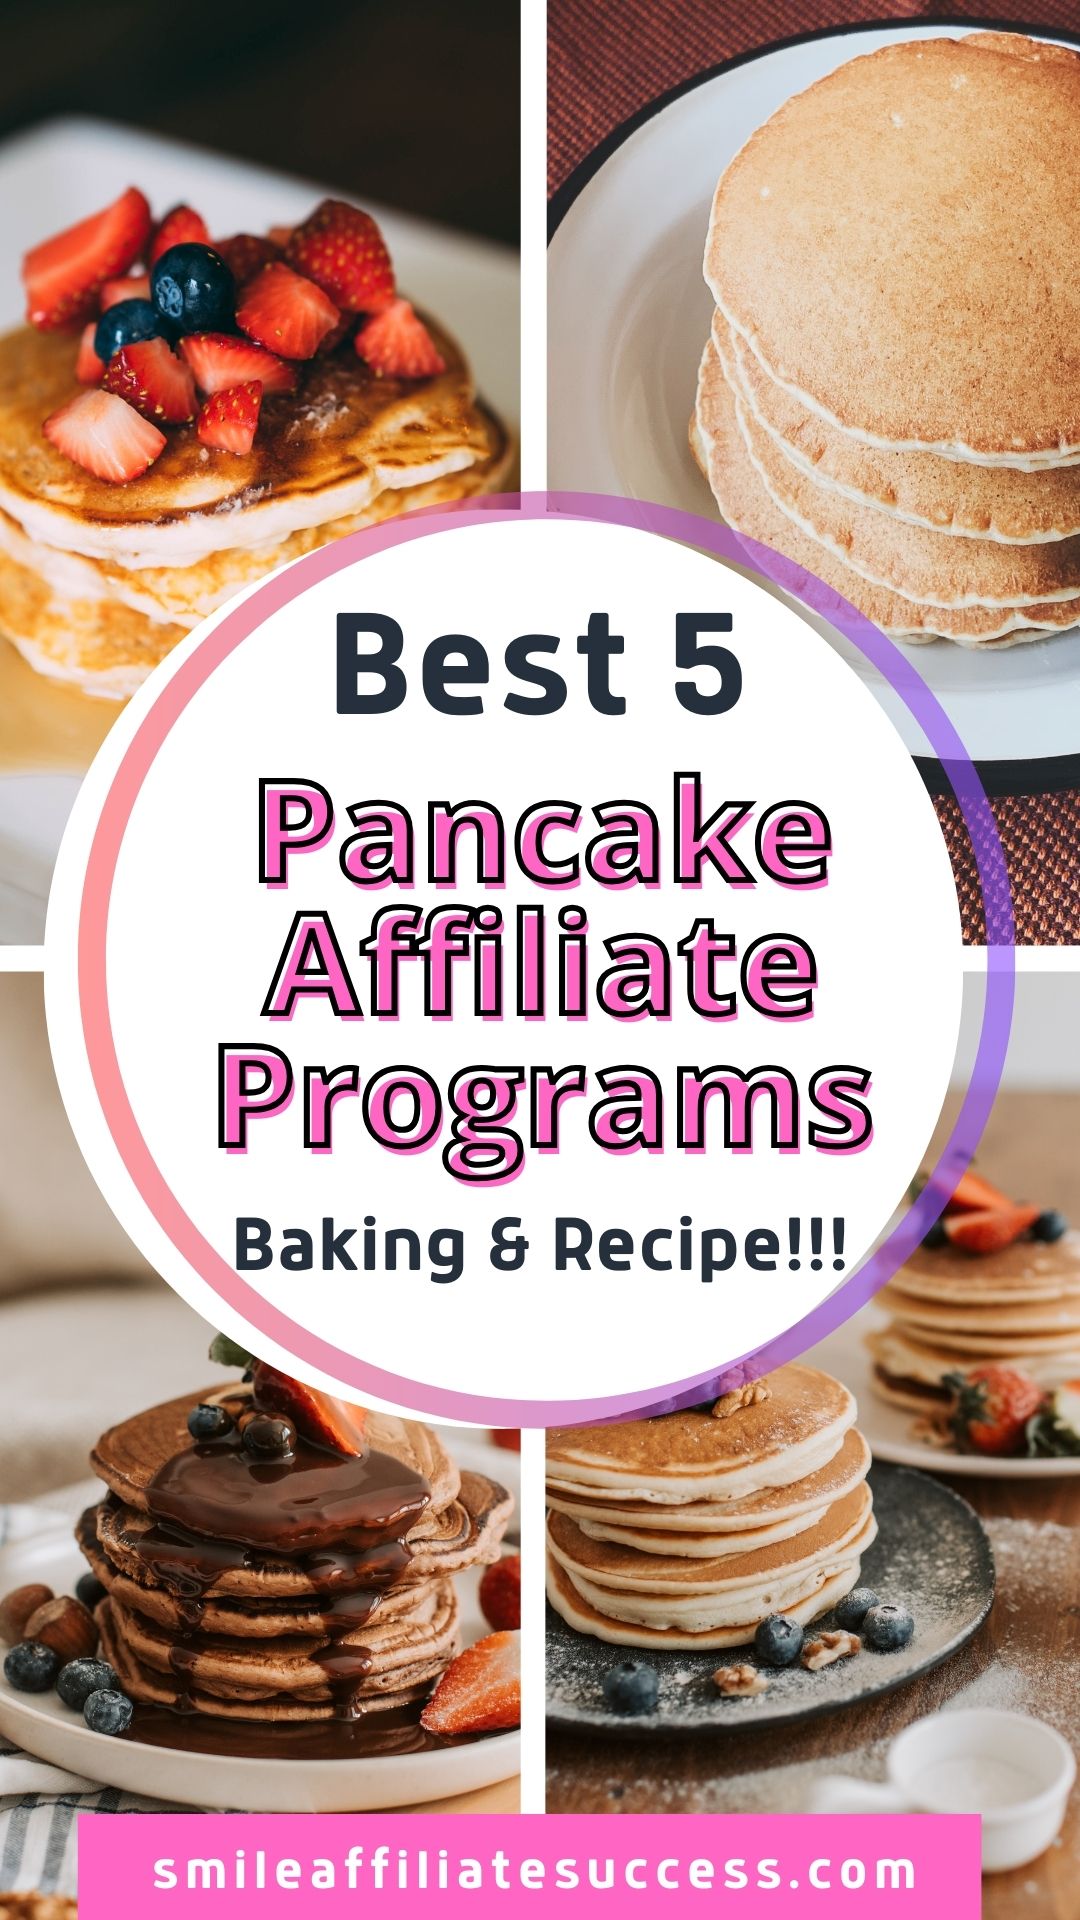 Best 5 Pancake Affiliate Programs